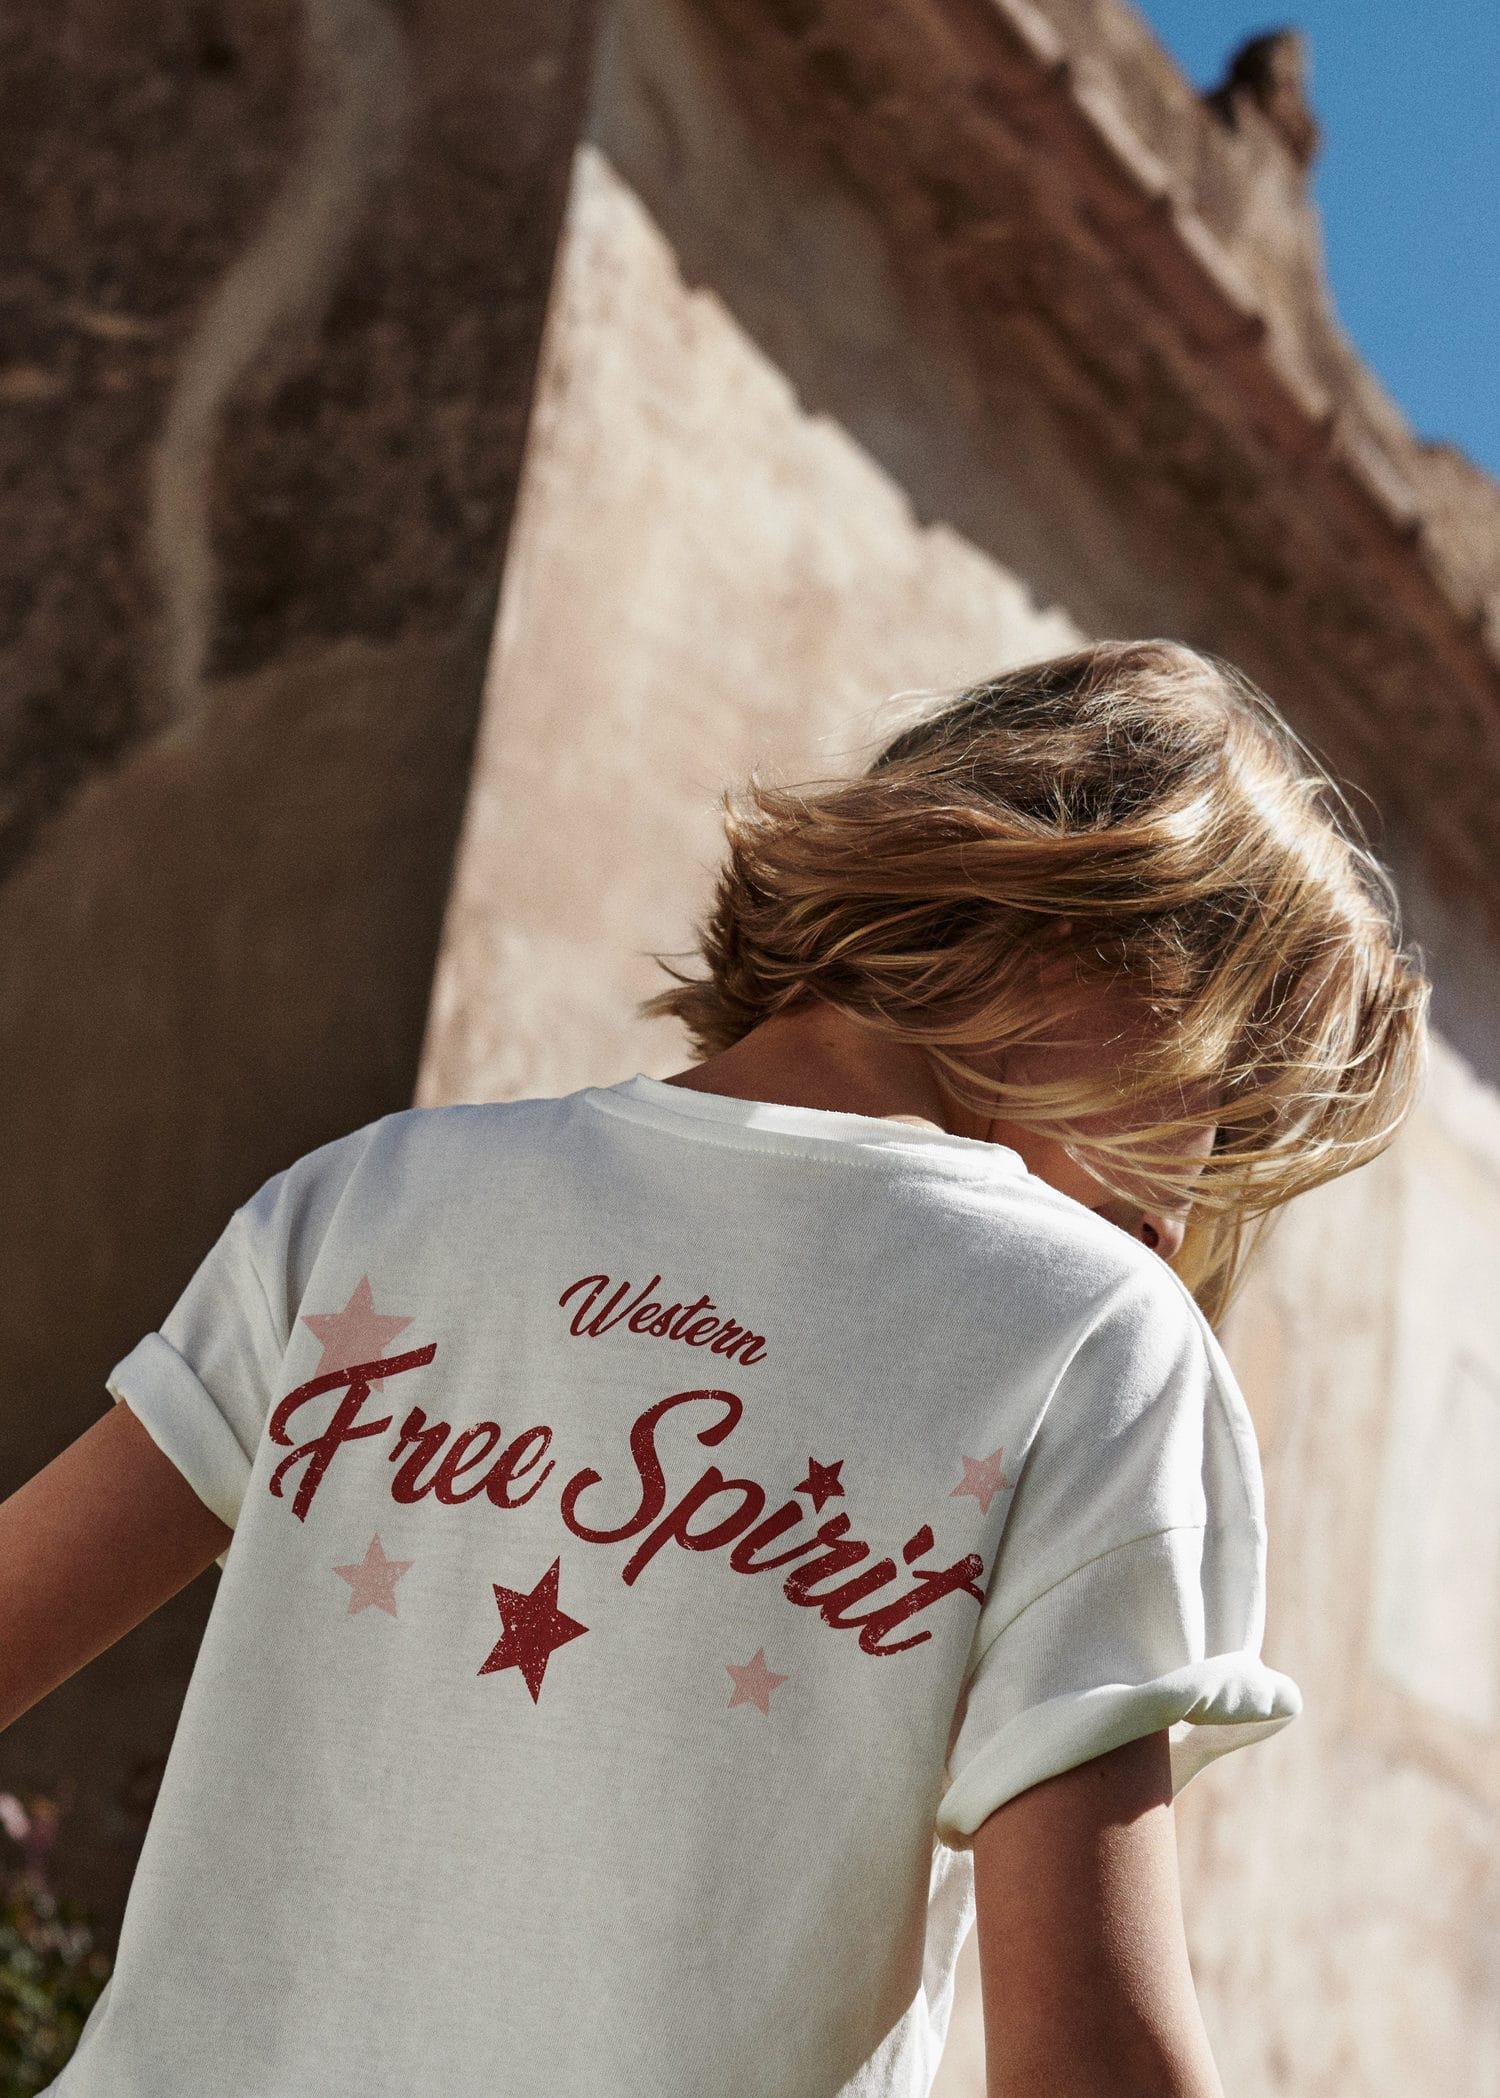 Mango - White Star Print T-Shirt, Kids Girls